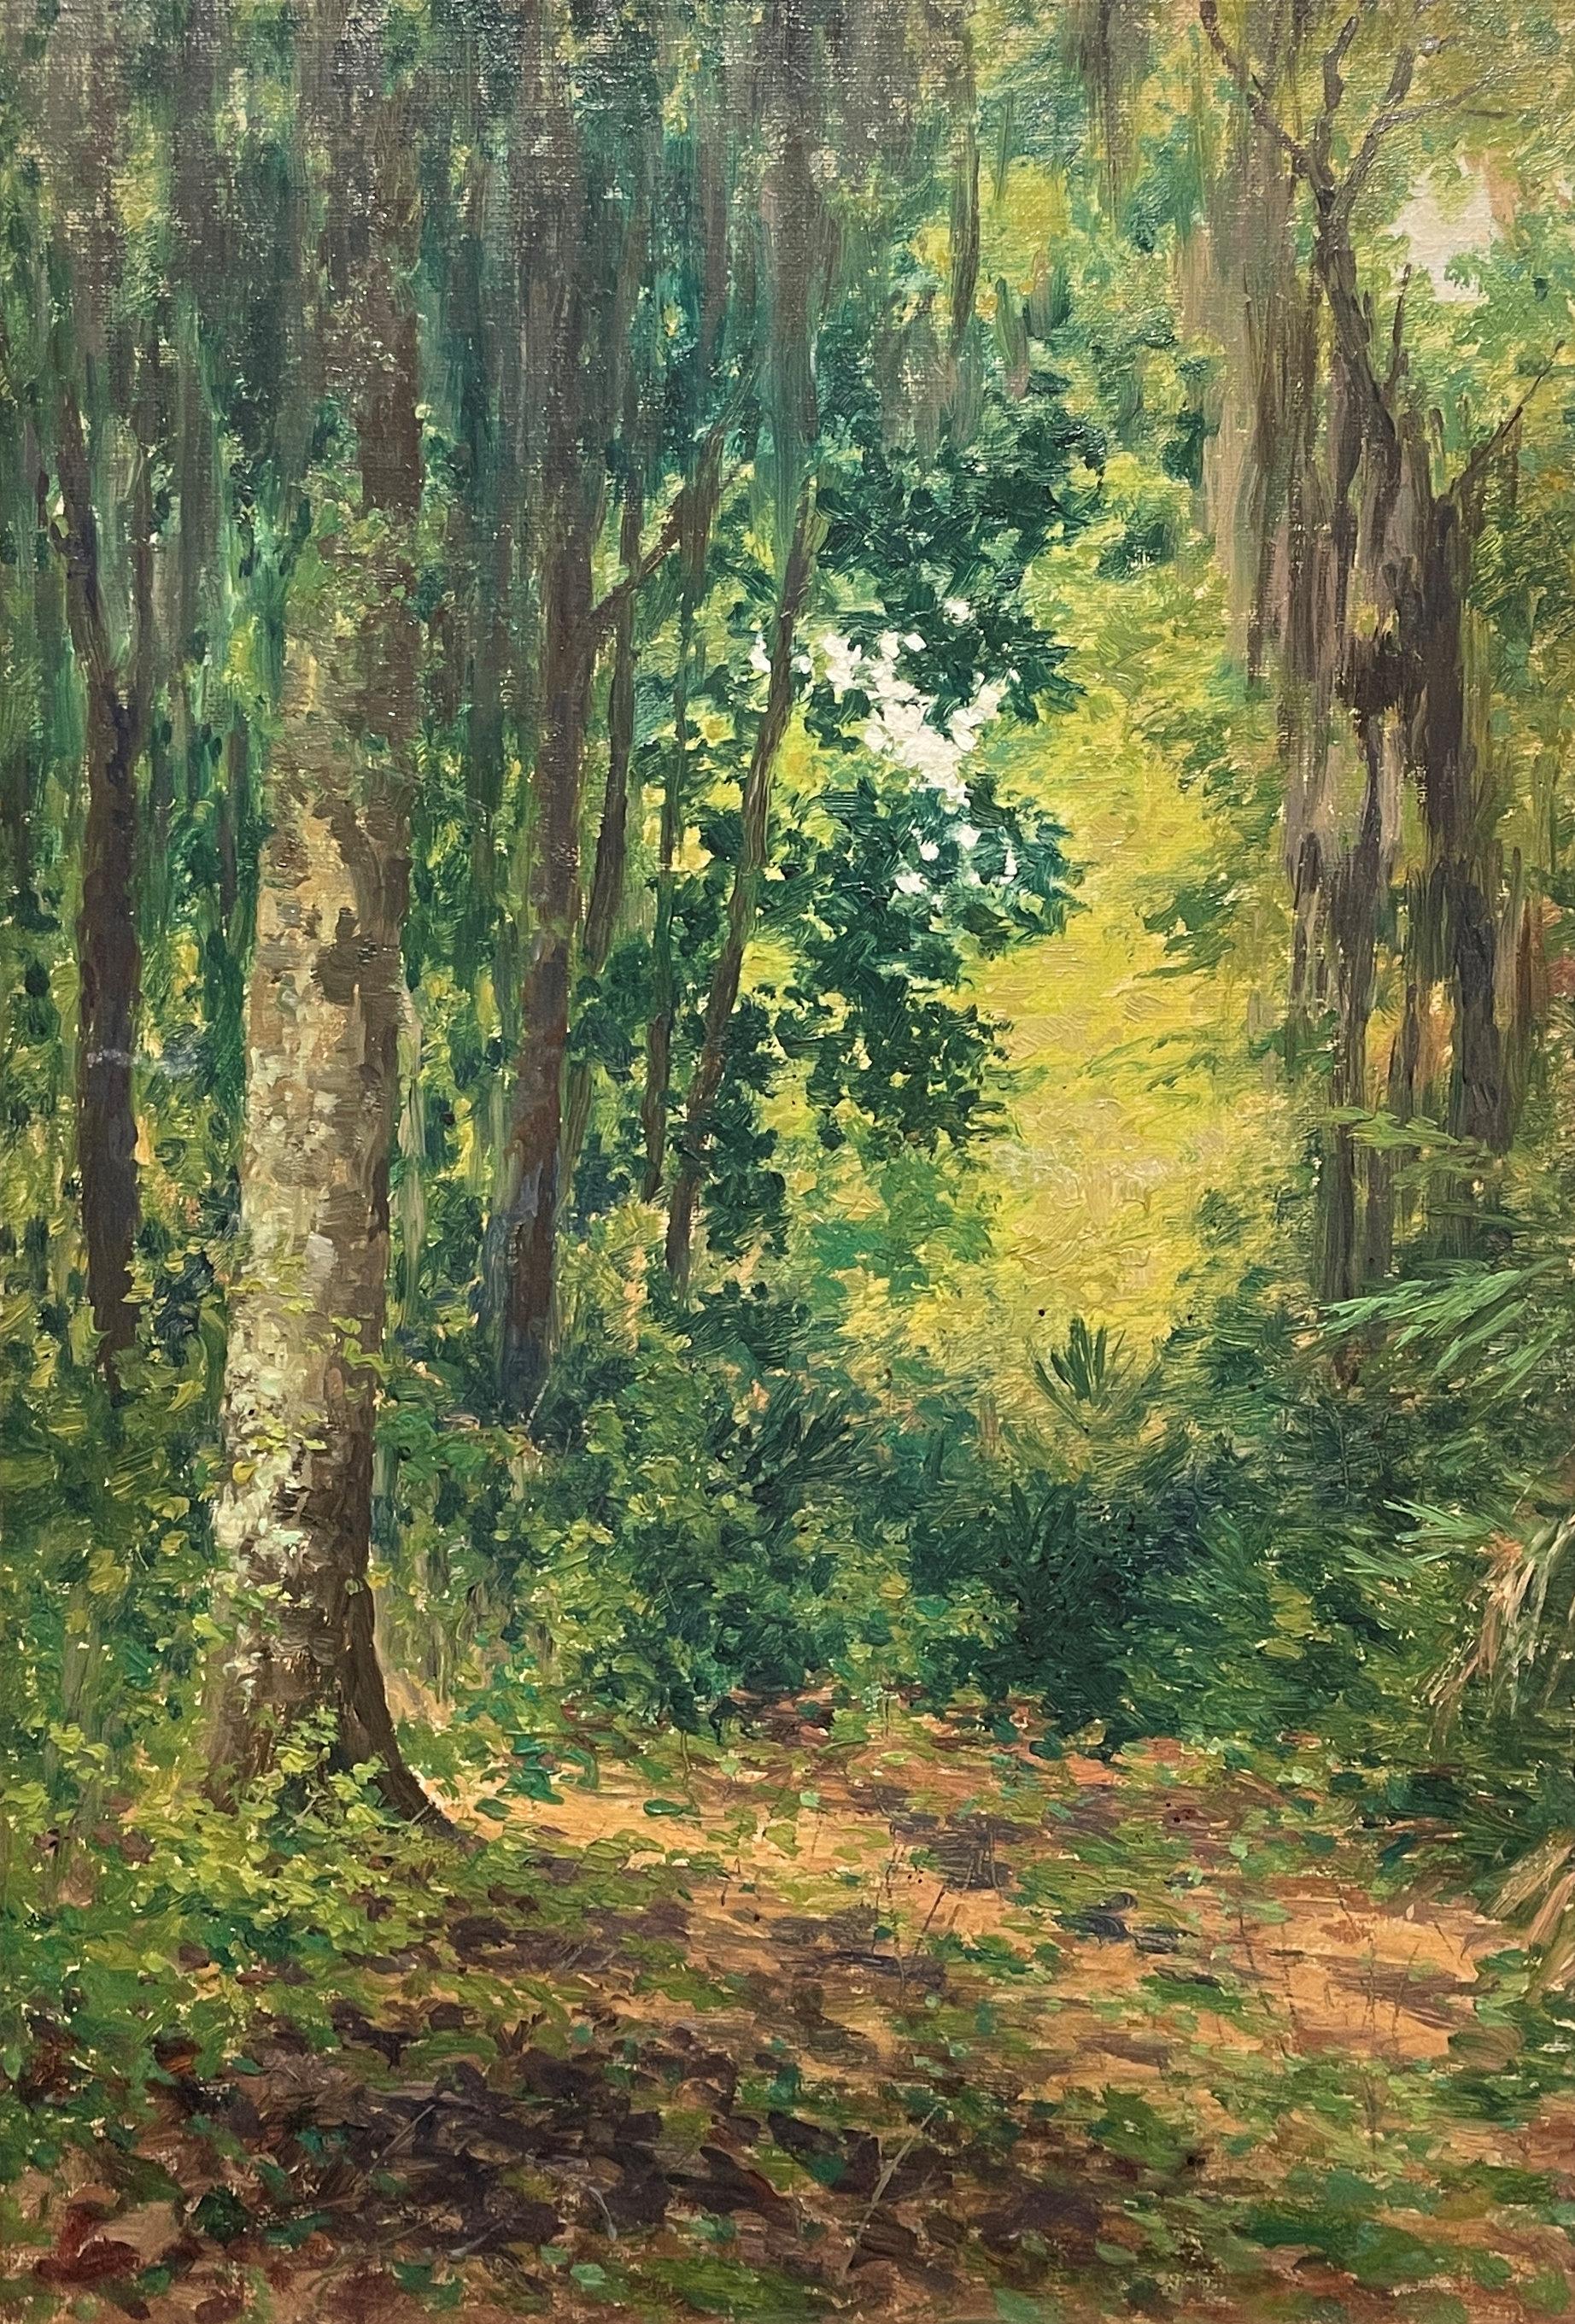 George Morse Landscape Painting - "Hubbard Park, Crescent City, Florida" George Frederick Morse, Landscape